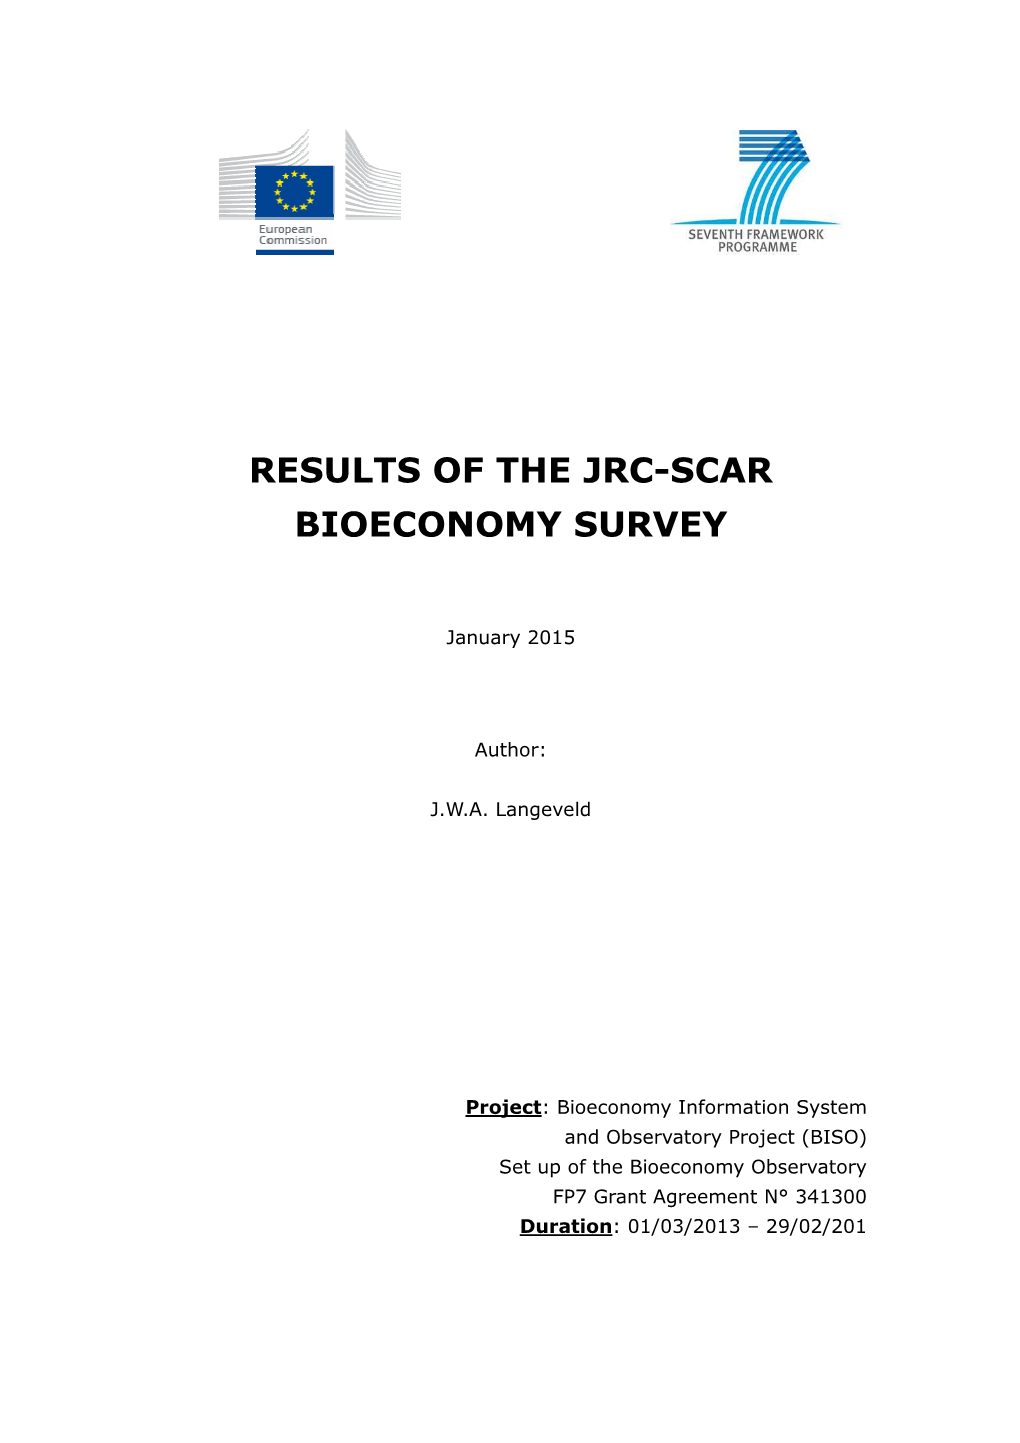 Results of the Jrc-Scar Bioeconomy Survey